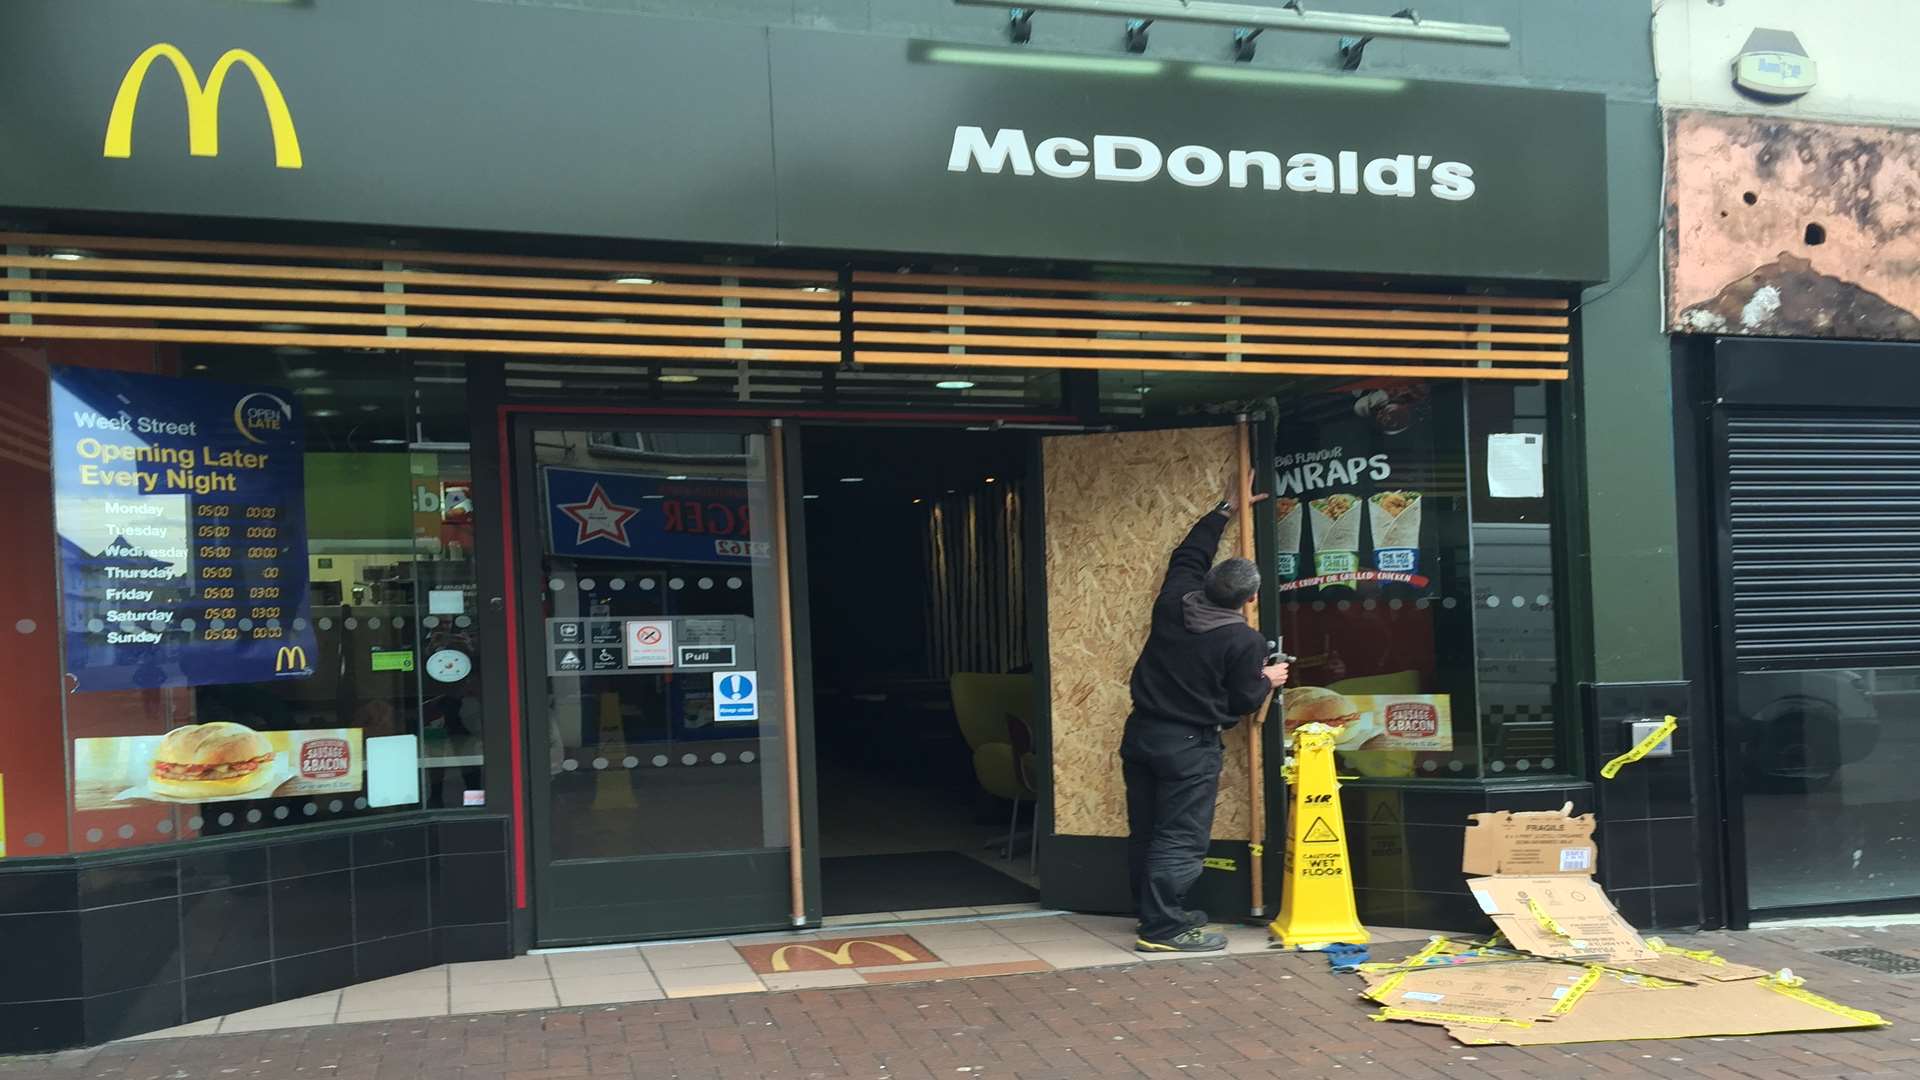 McDonald's Maidstone had its door smashed